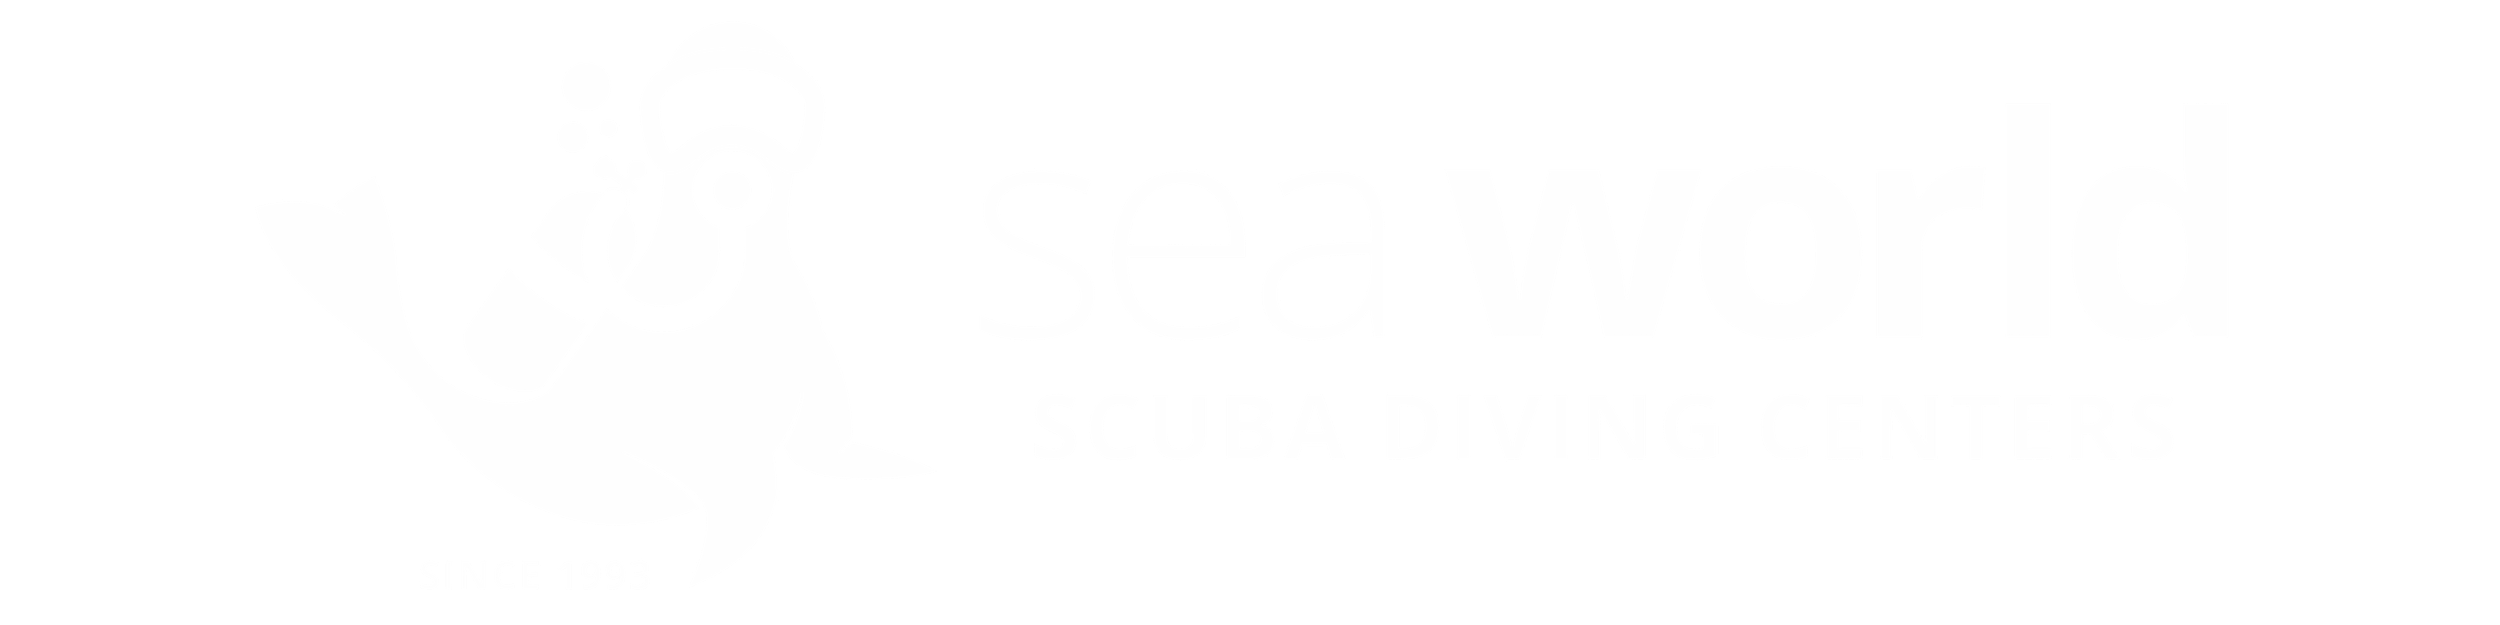 SeaWorld Diving Centers